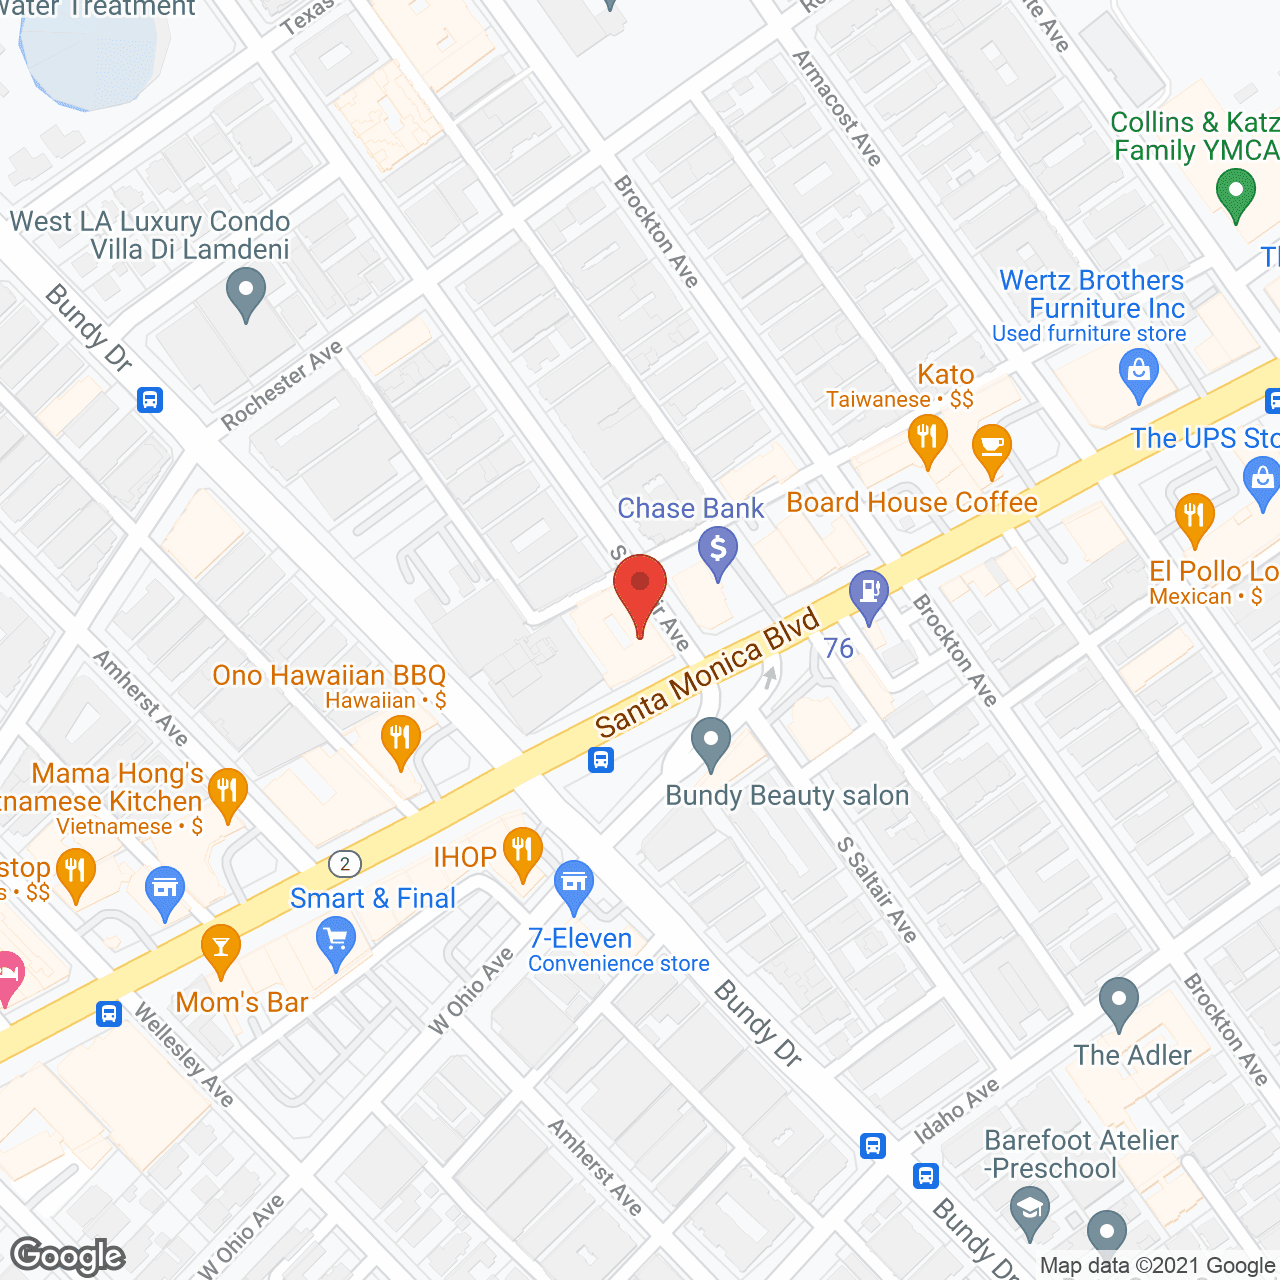 Santa Monica Pavilion- CLOSED in google map